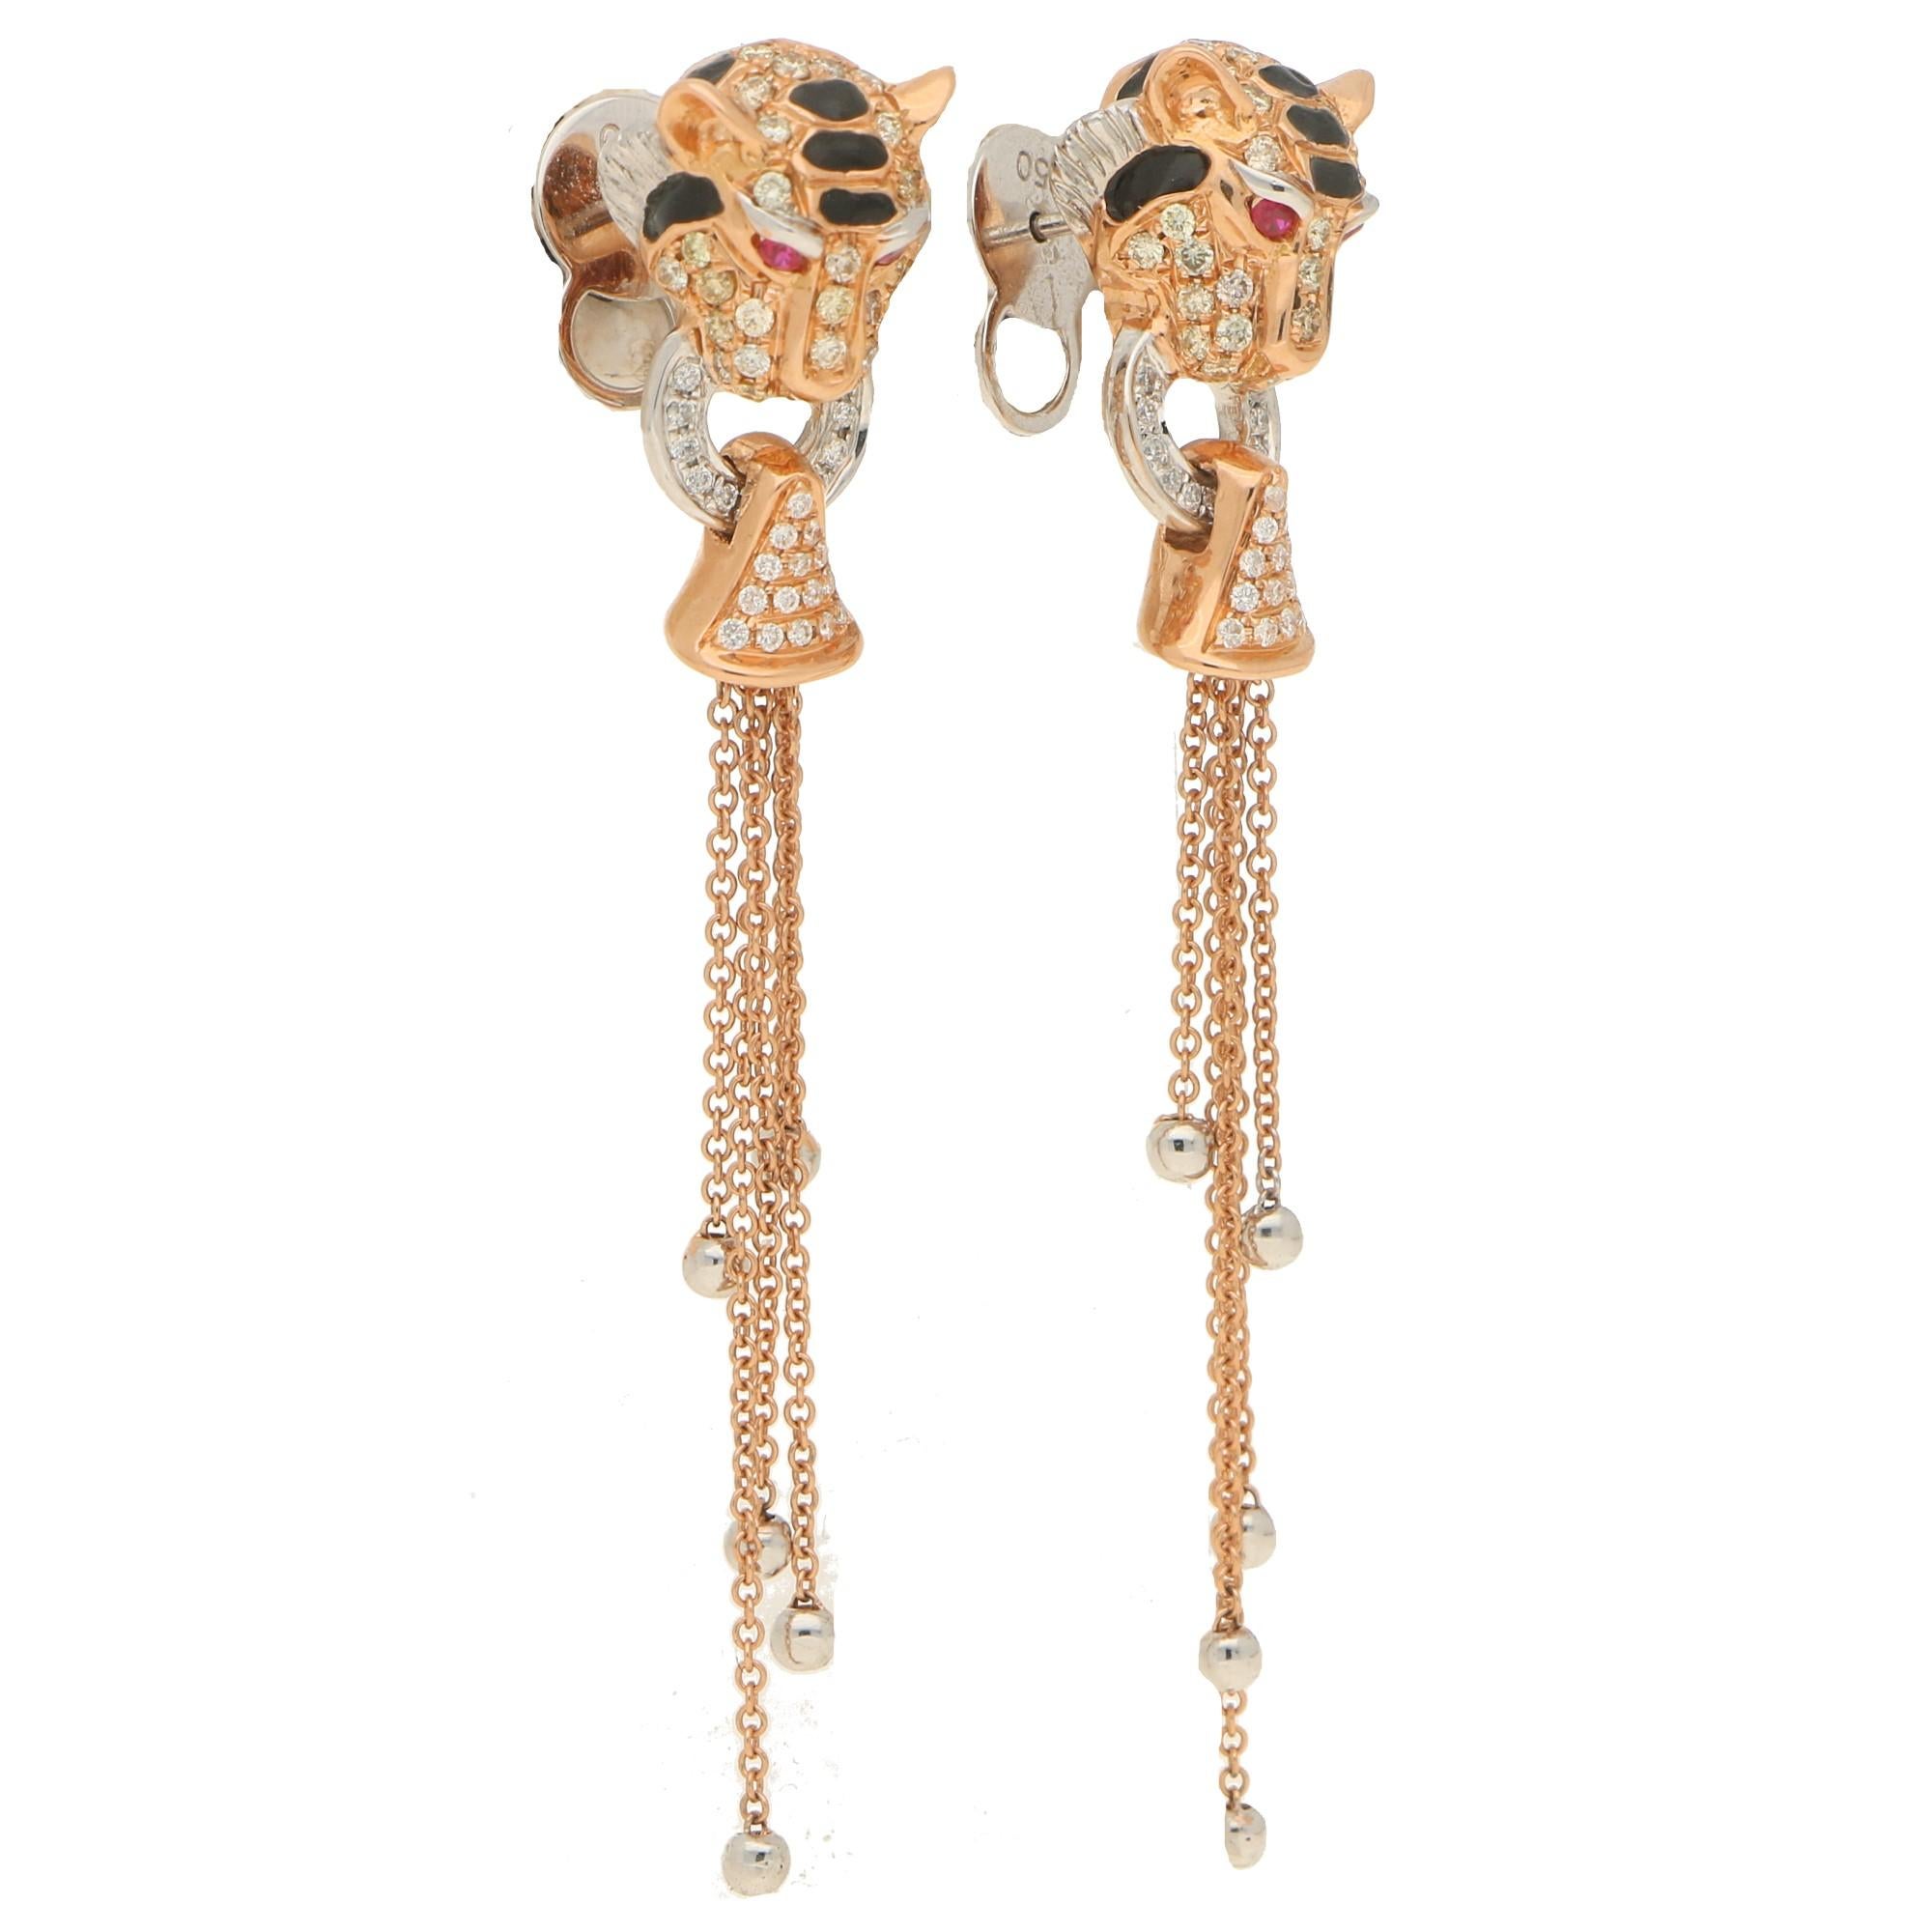 Round Cut Diamond, Enamel and Ruby Tiger Head Earrings Set in 18k Rose Gold